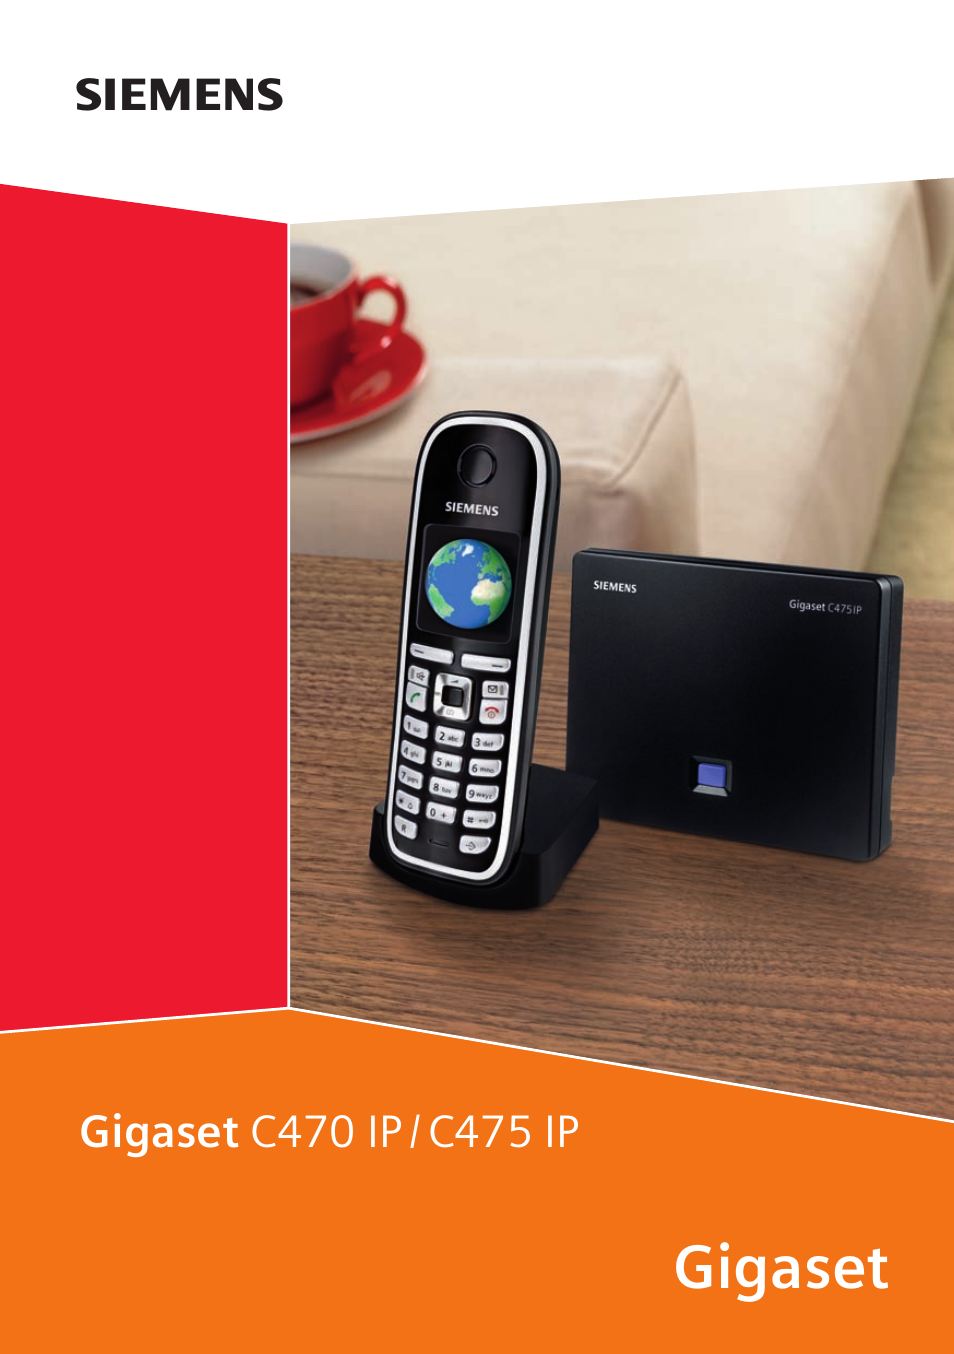 Siemens GIGASET C475 IP User Manual | 217 pages